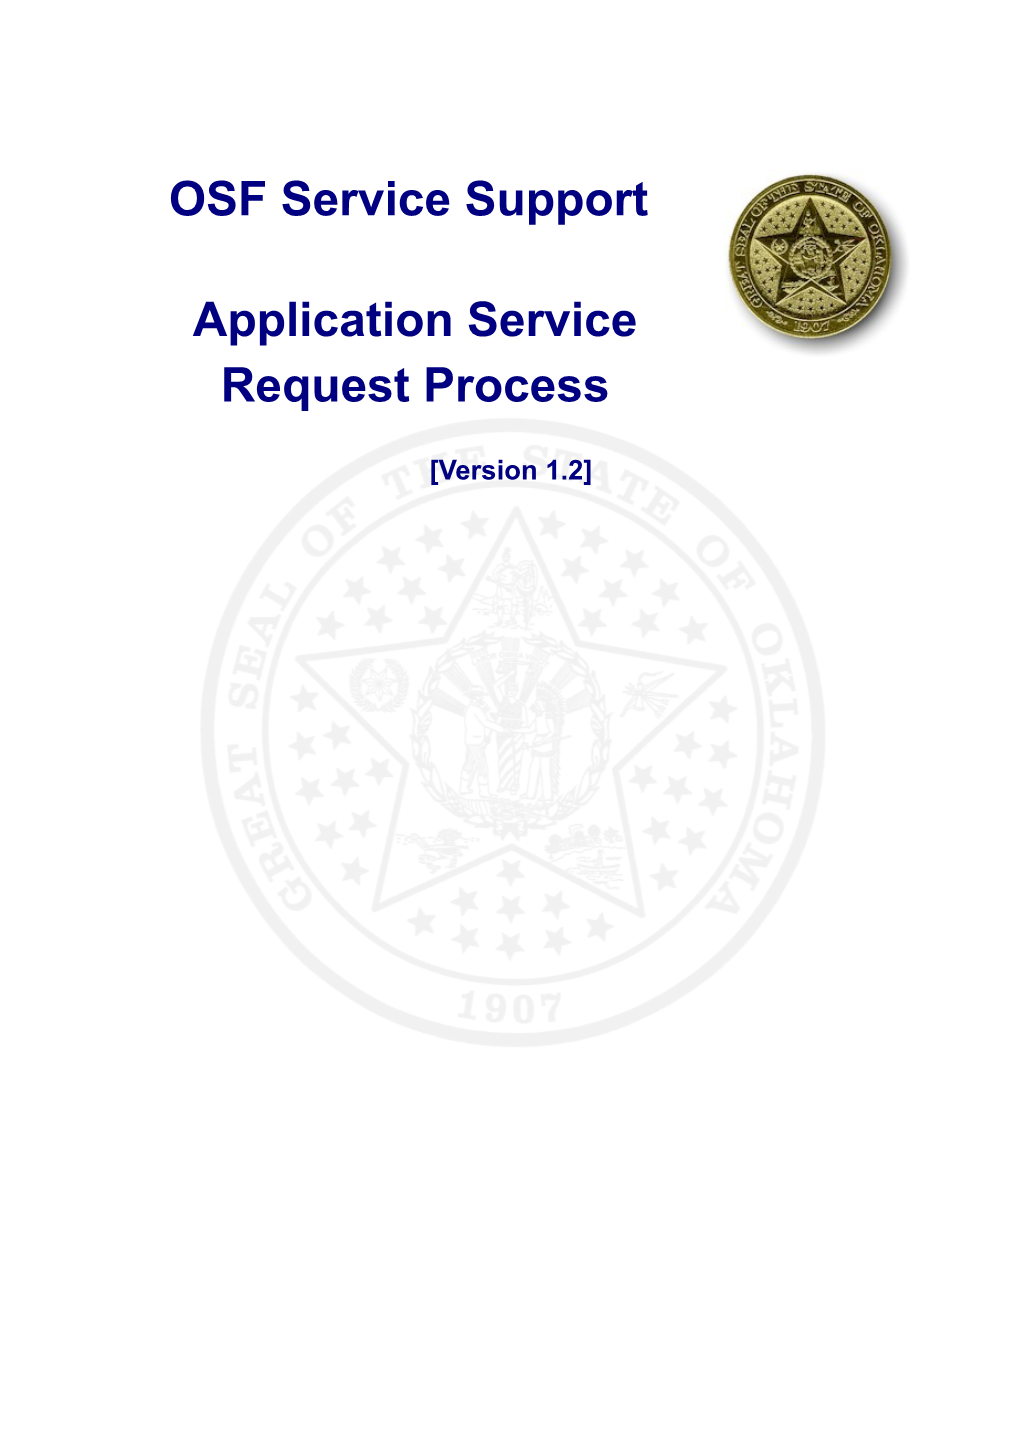 Application Service Request Process